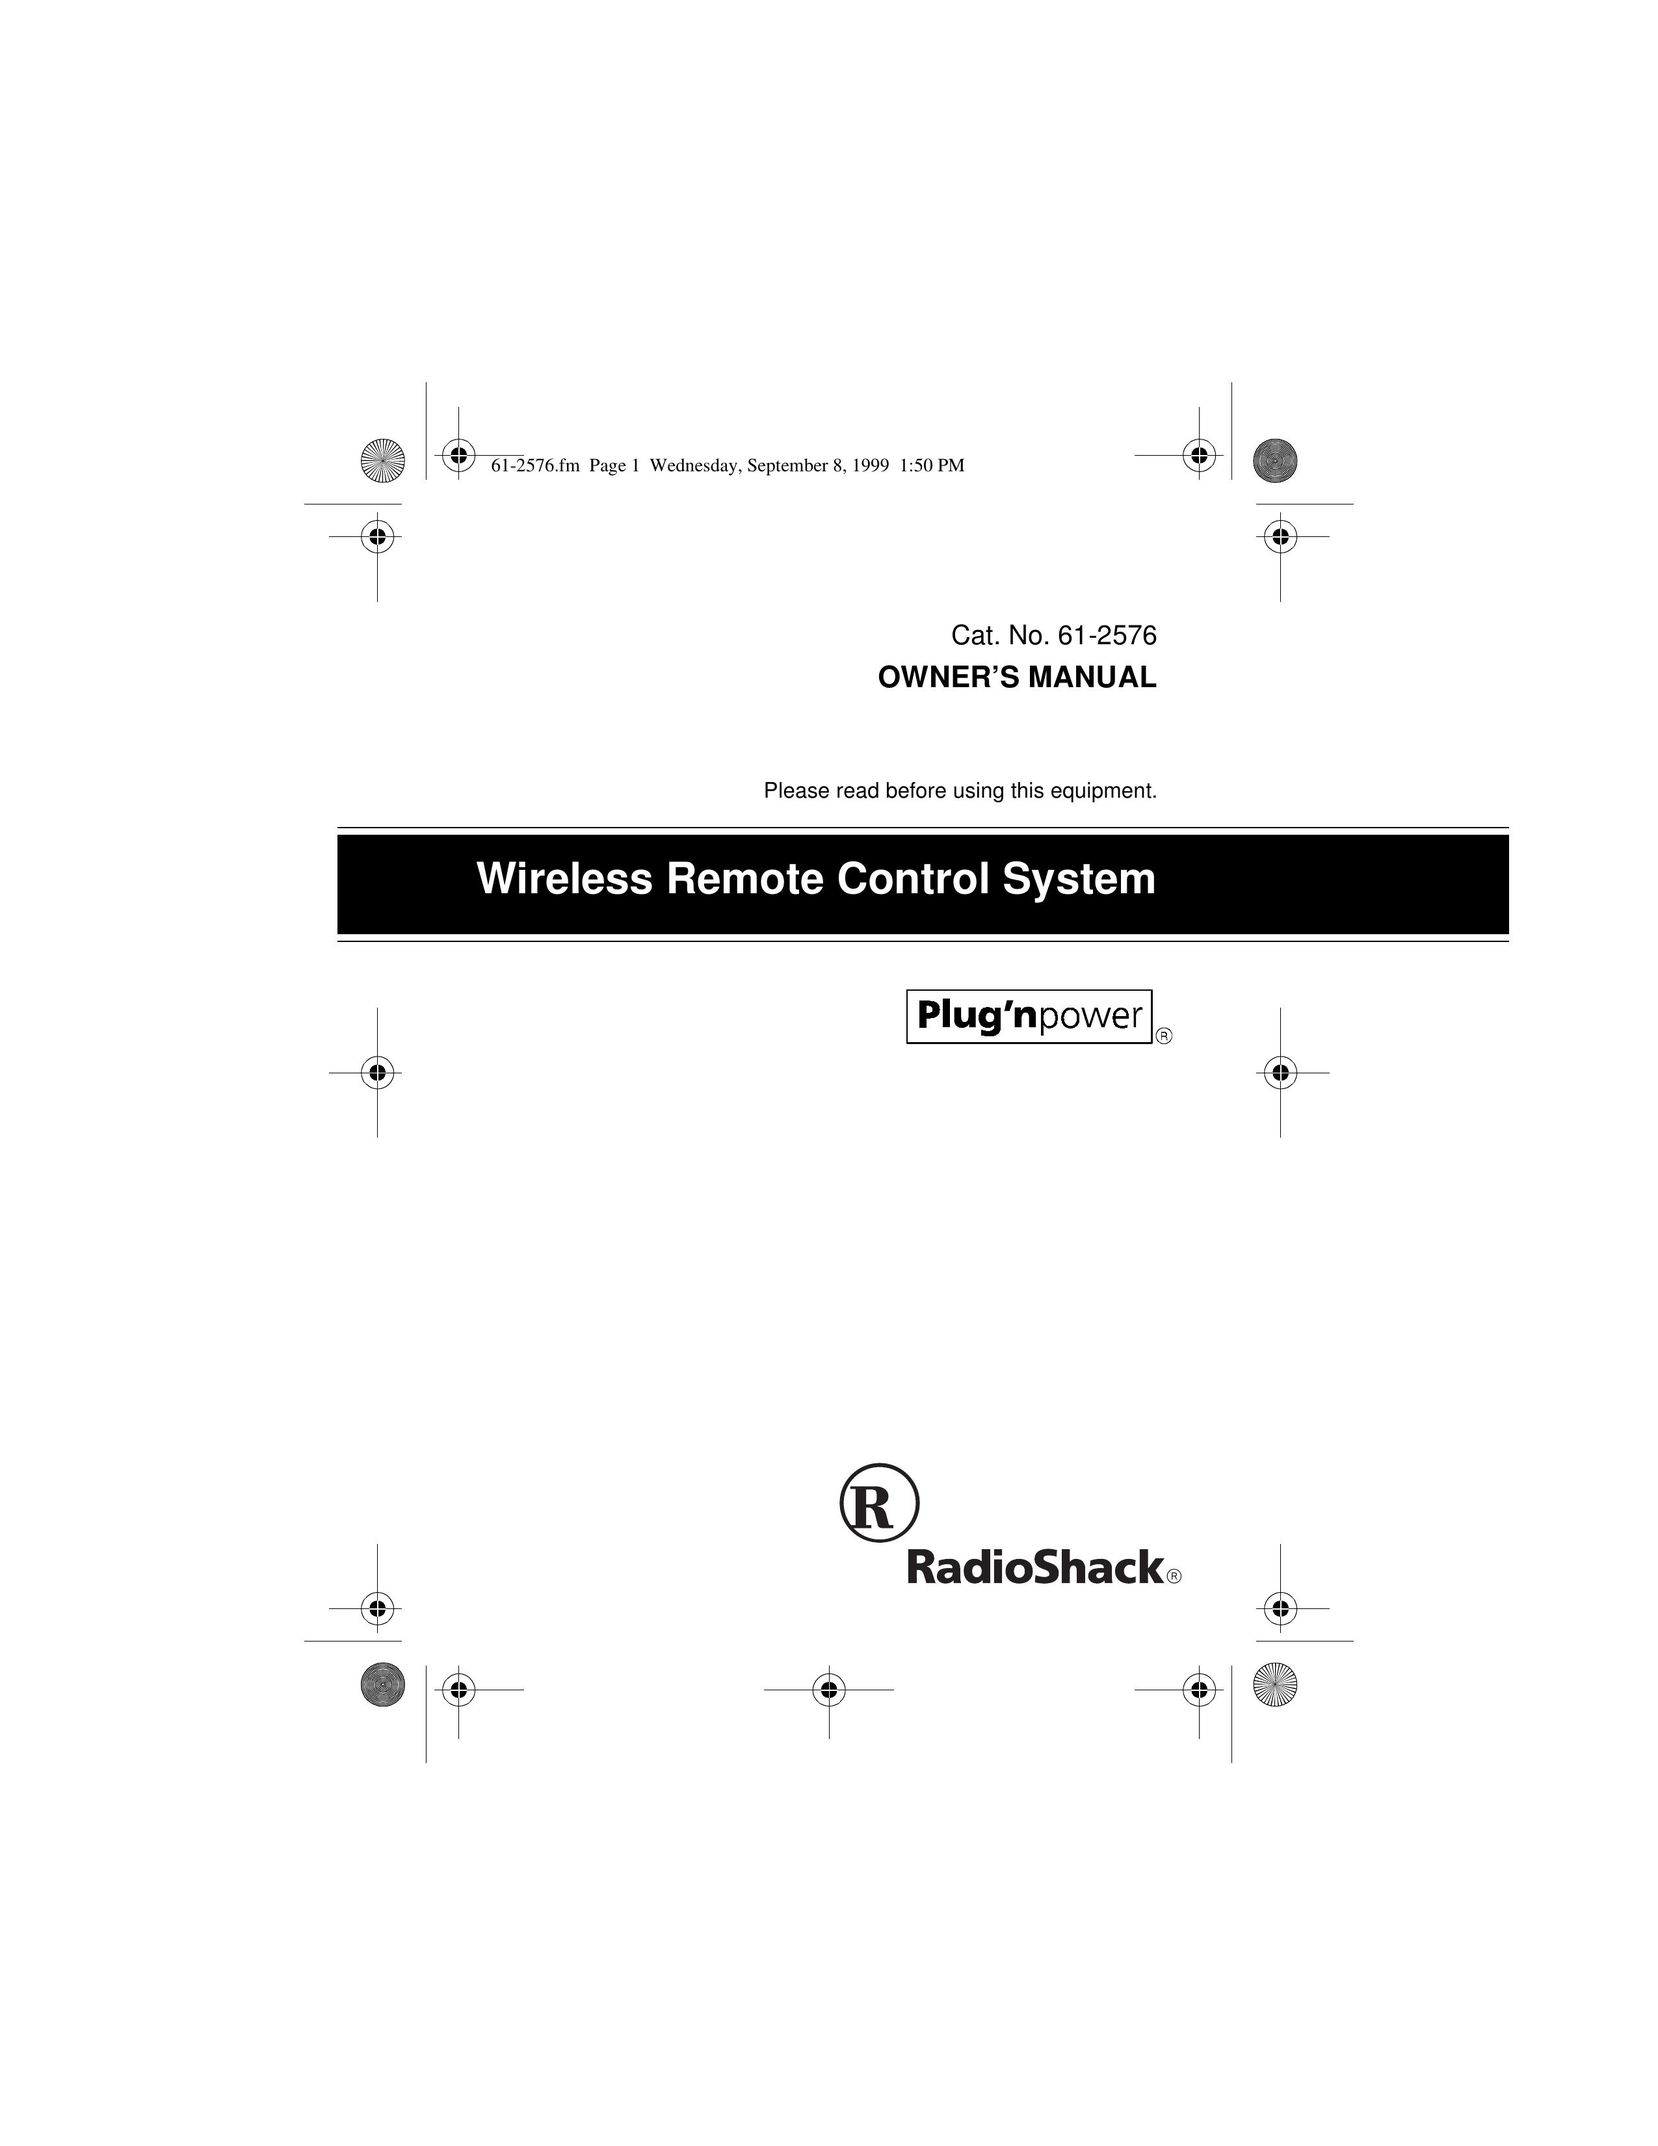 Radio Shack Wireless Remote Control System Universal Remote User Manual